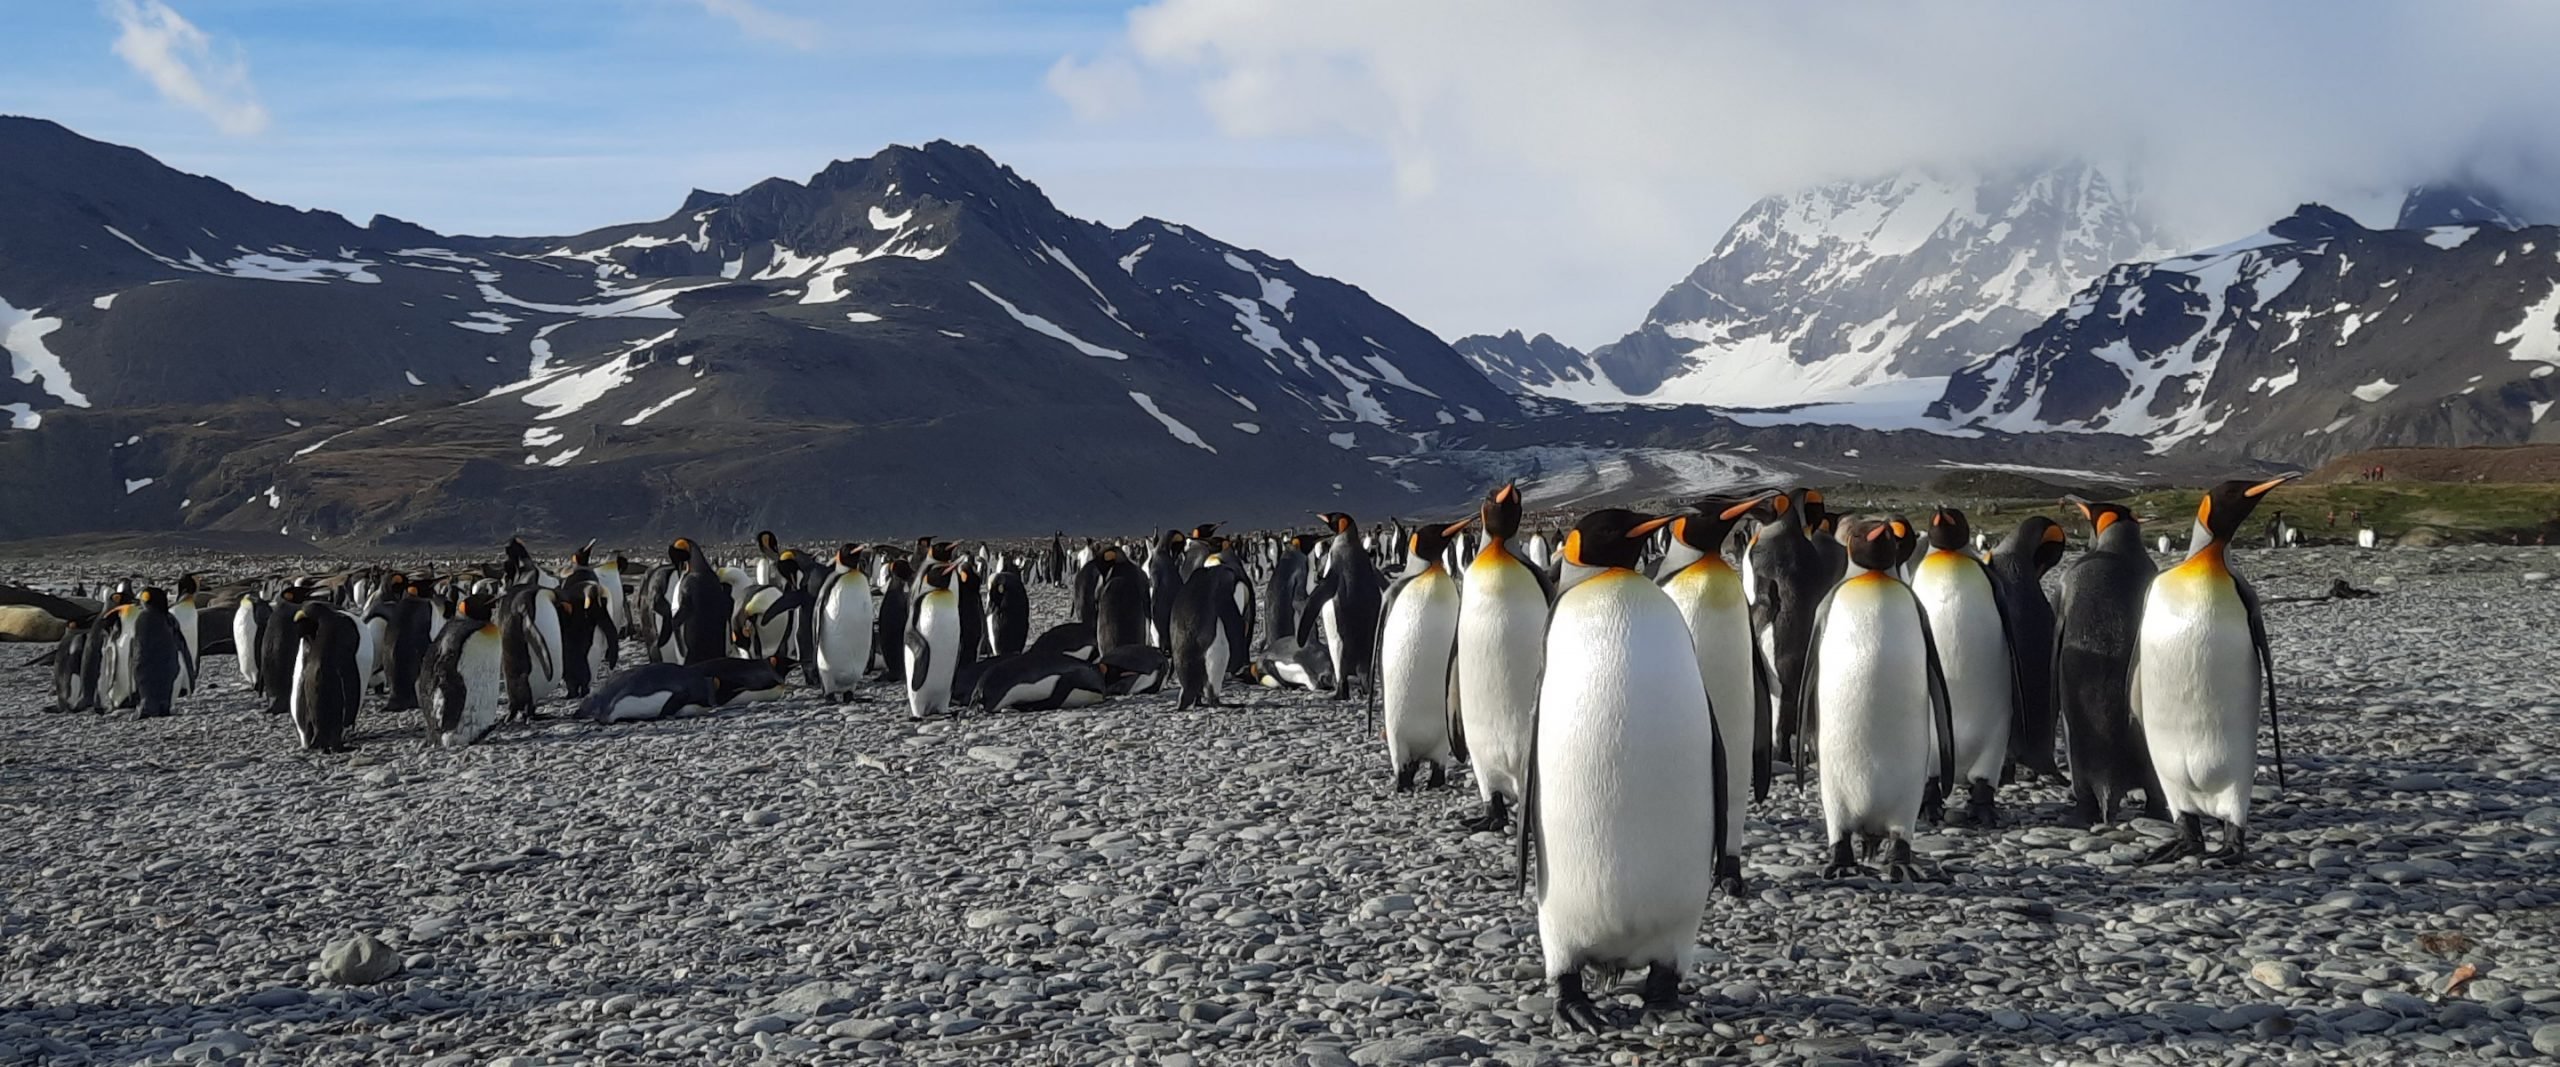 The incredible king penguins of South Georgia - Swoop Antarctica Blog